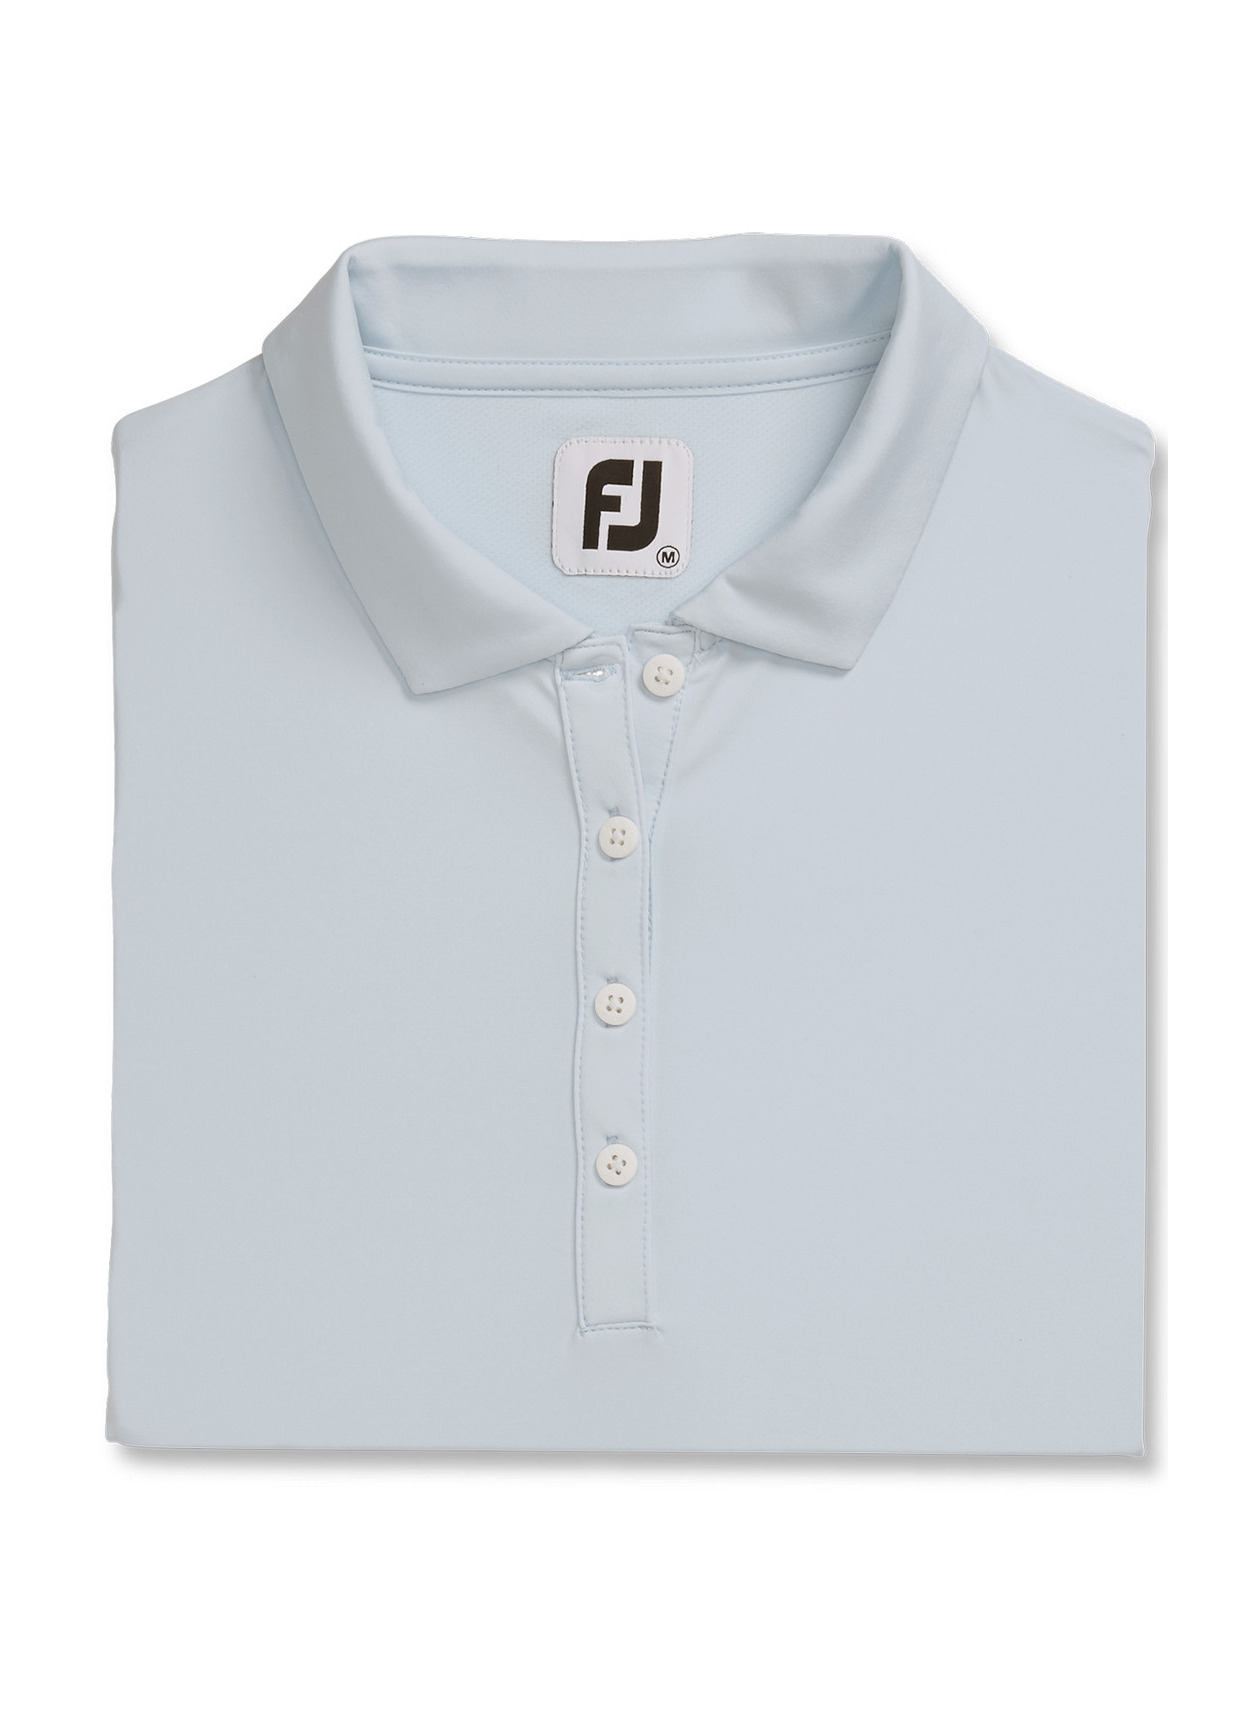 FootJoy Women's Ice Blue Sun Protection Long-Sleeve Shirt